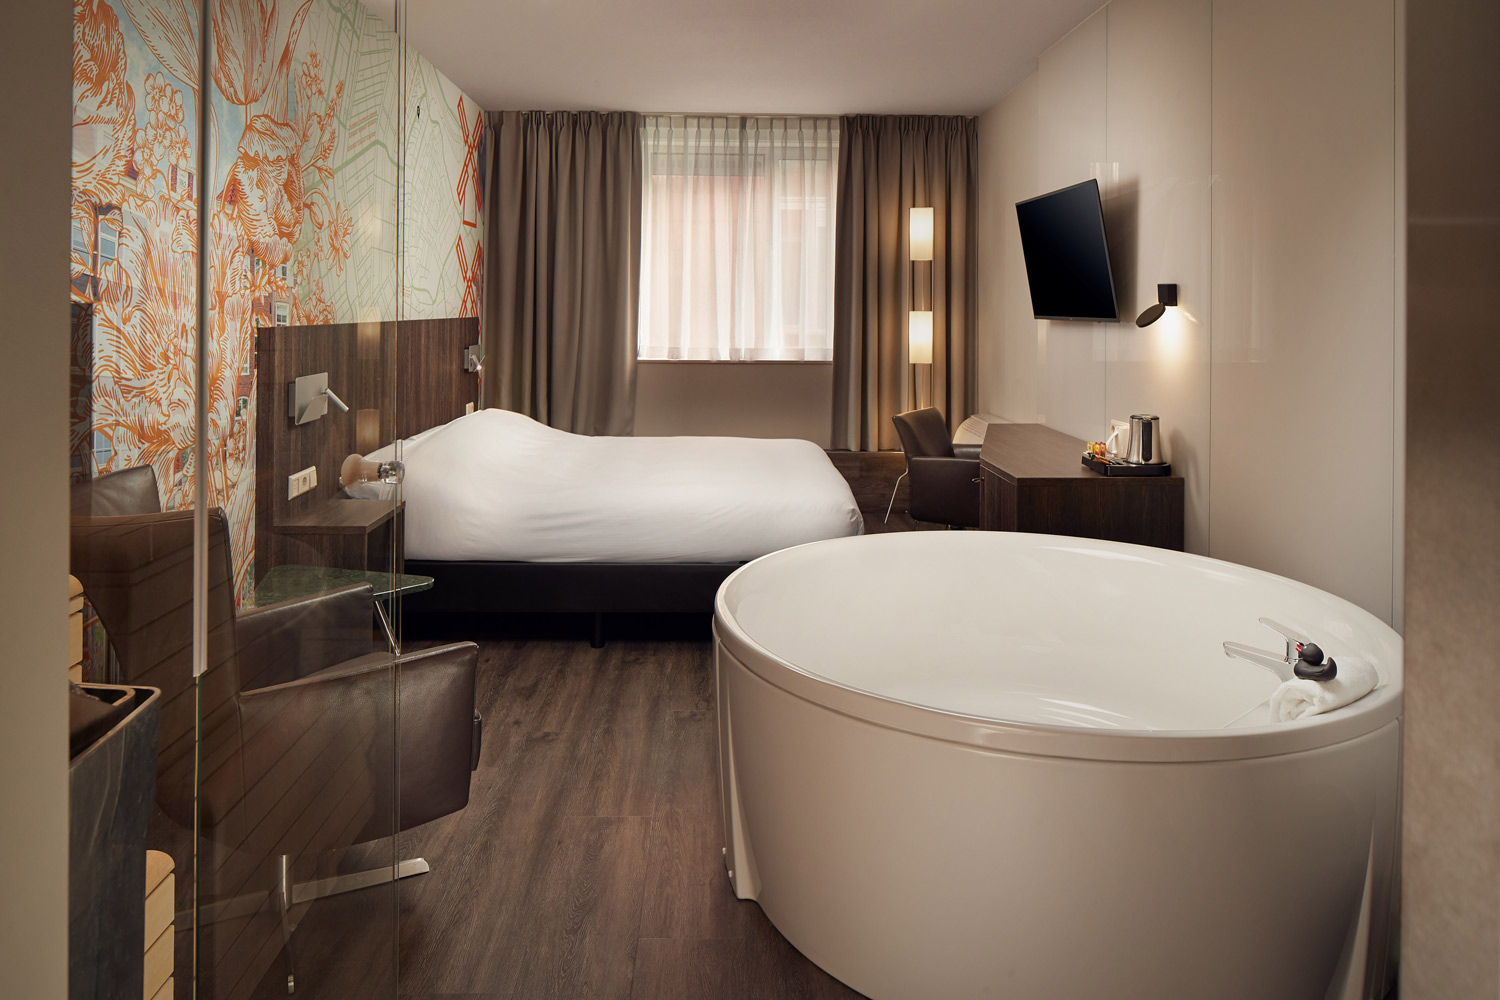 Inntel Hotels Amsterdam Centre - Wellness hotel Room - Overview